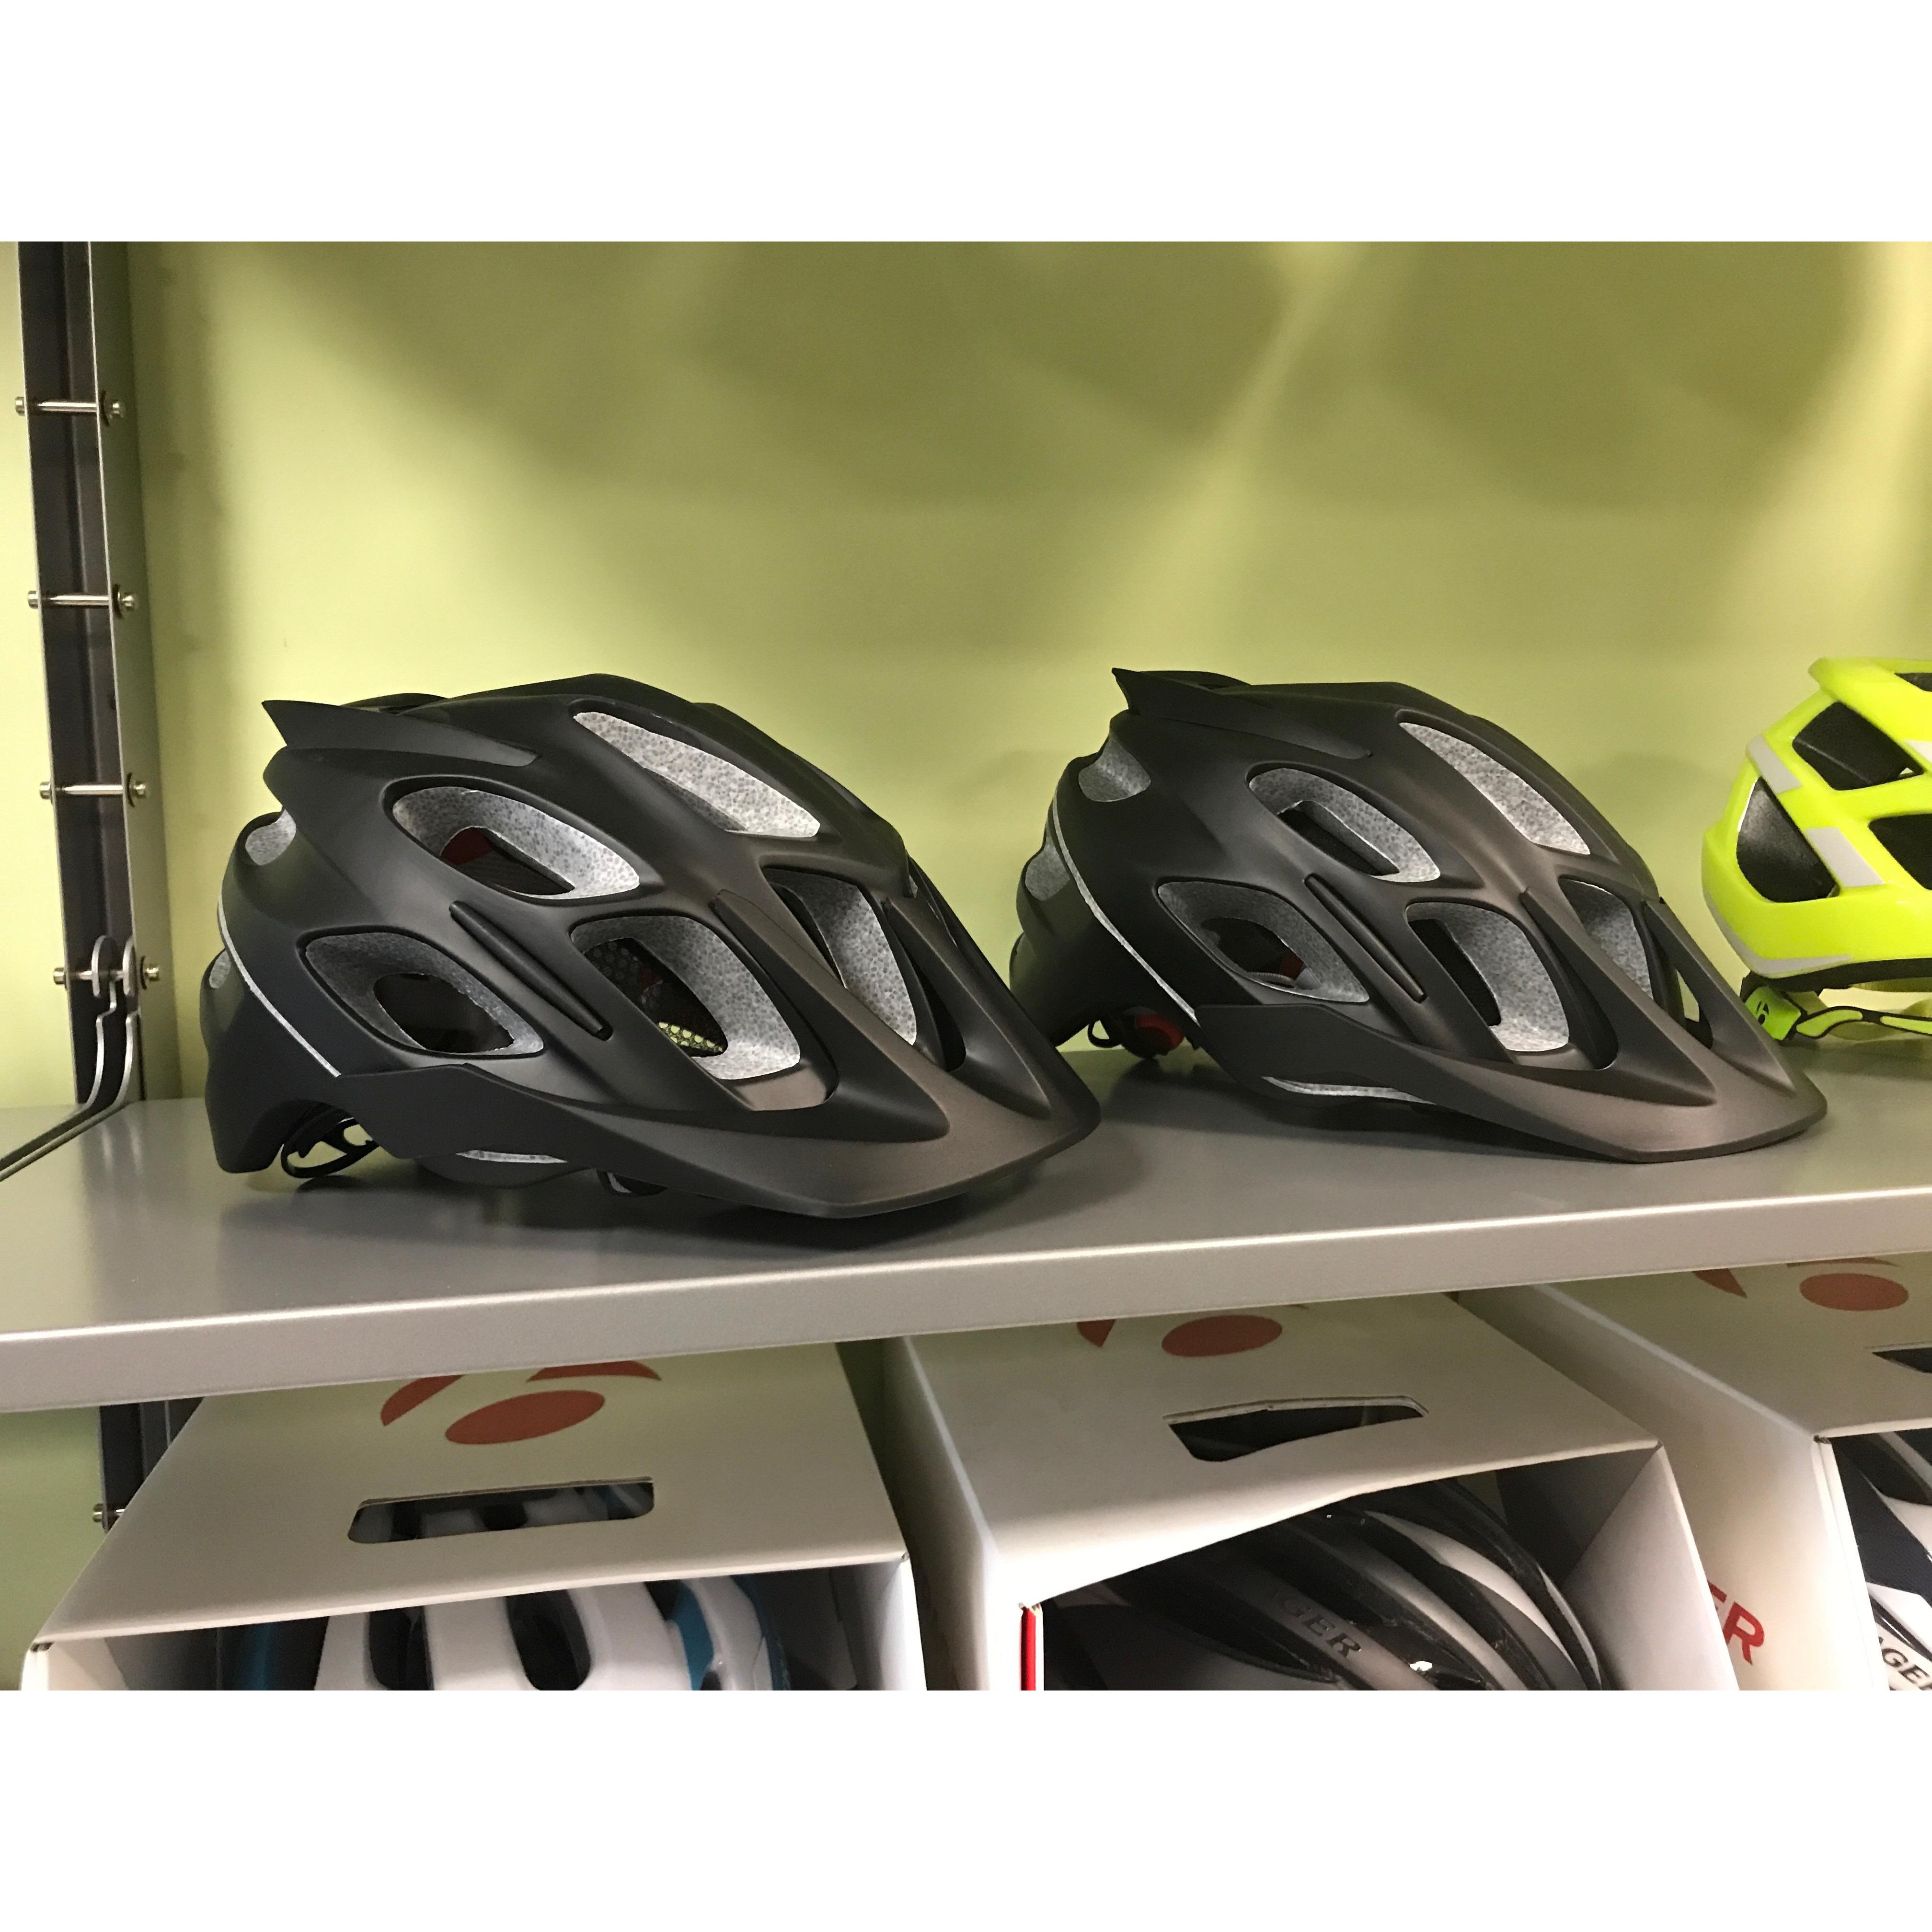 ABK Mountain Bike Helmet Black